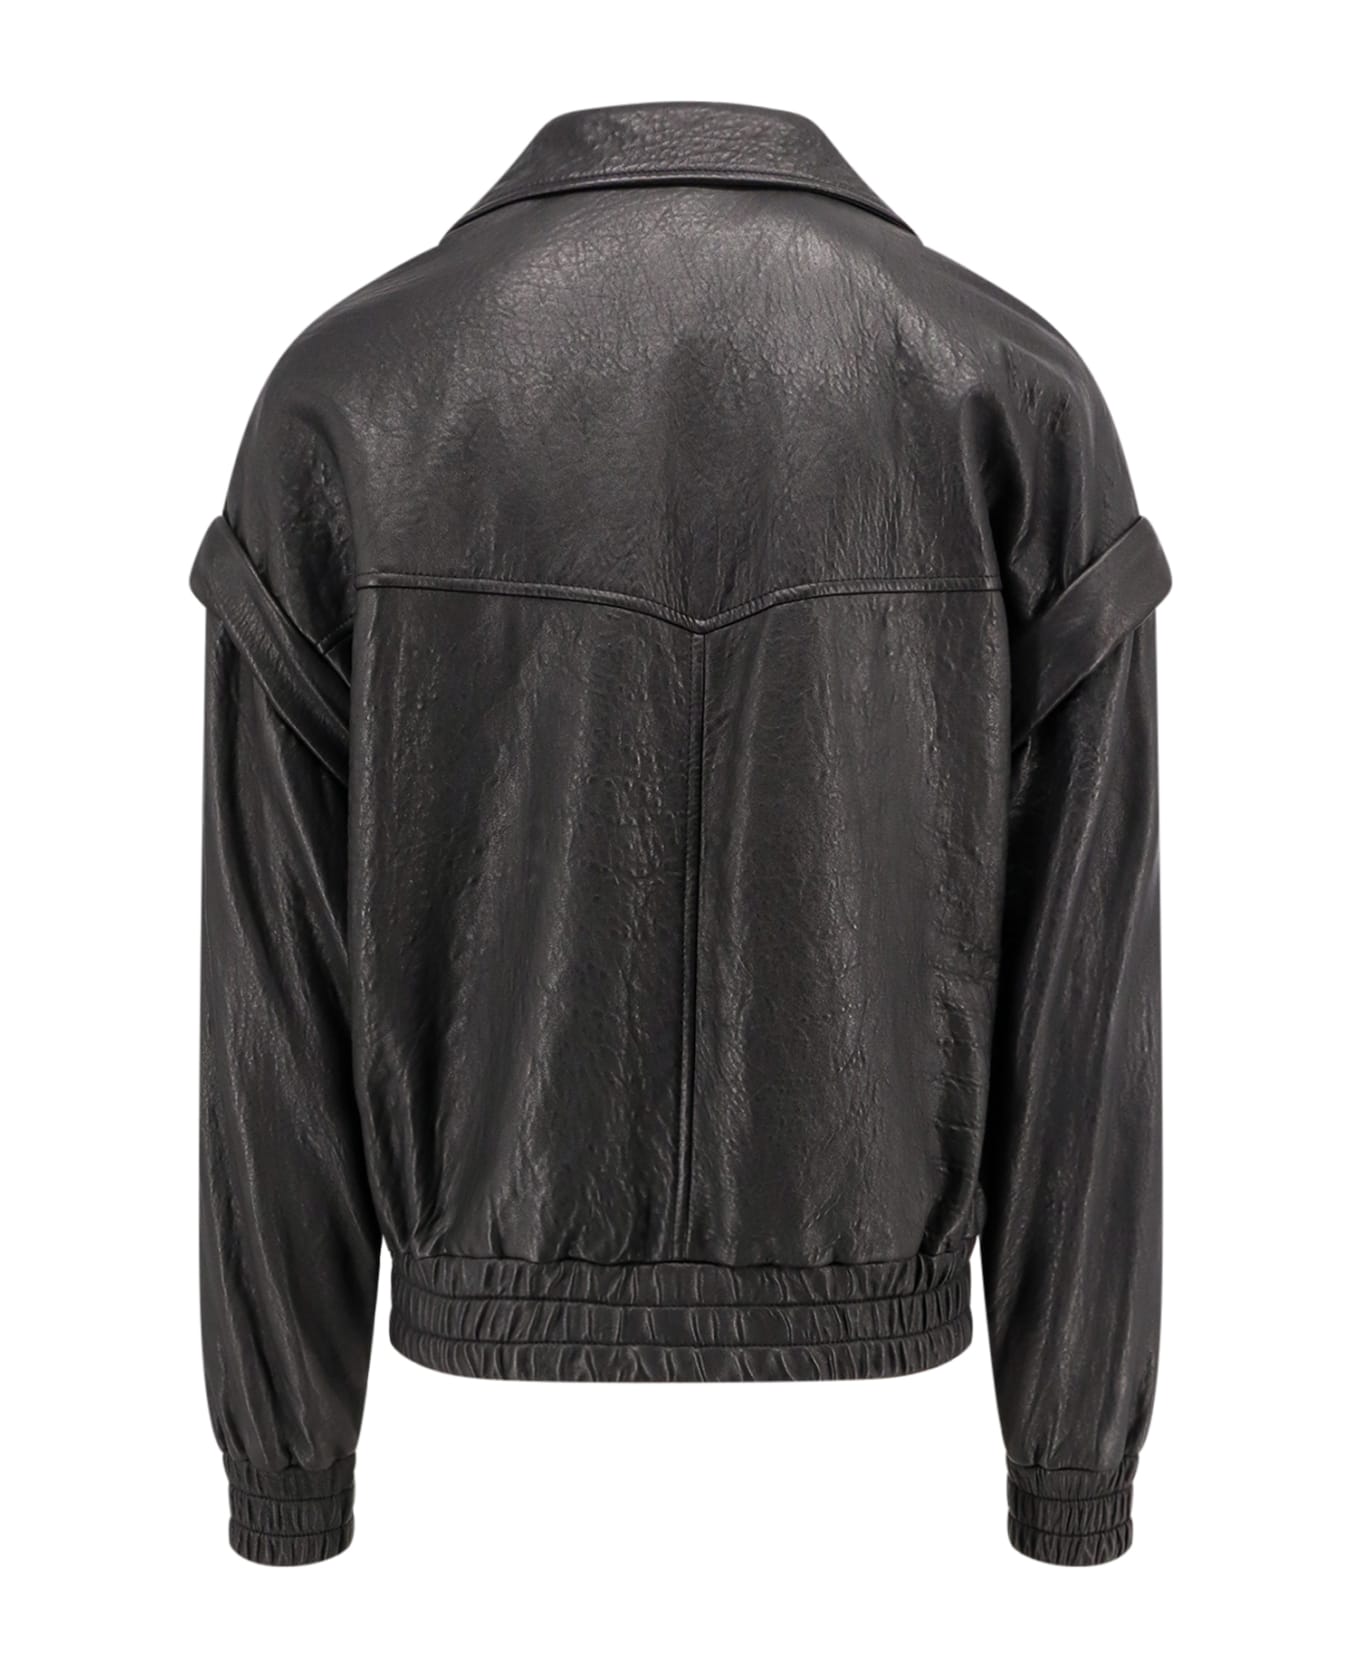 Saint Laurent Black Bomber Jacket With Dropped Shoulders In Leather Man - Black